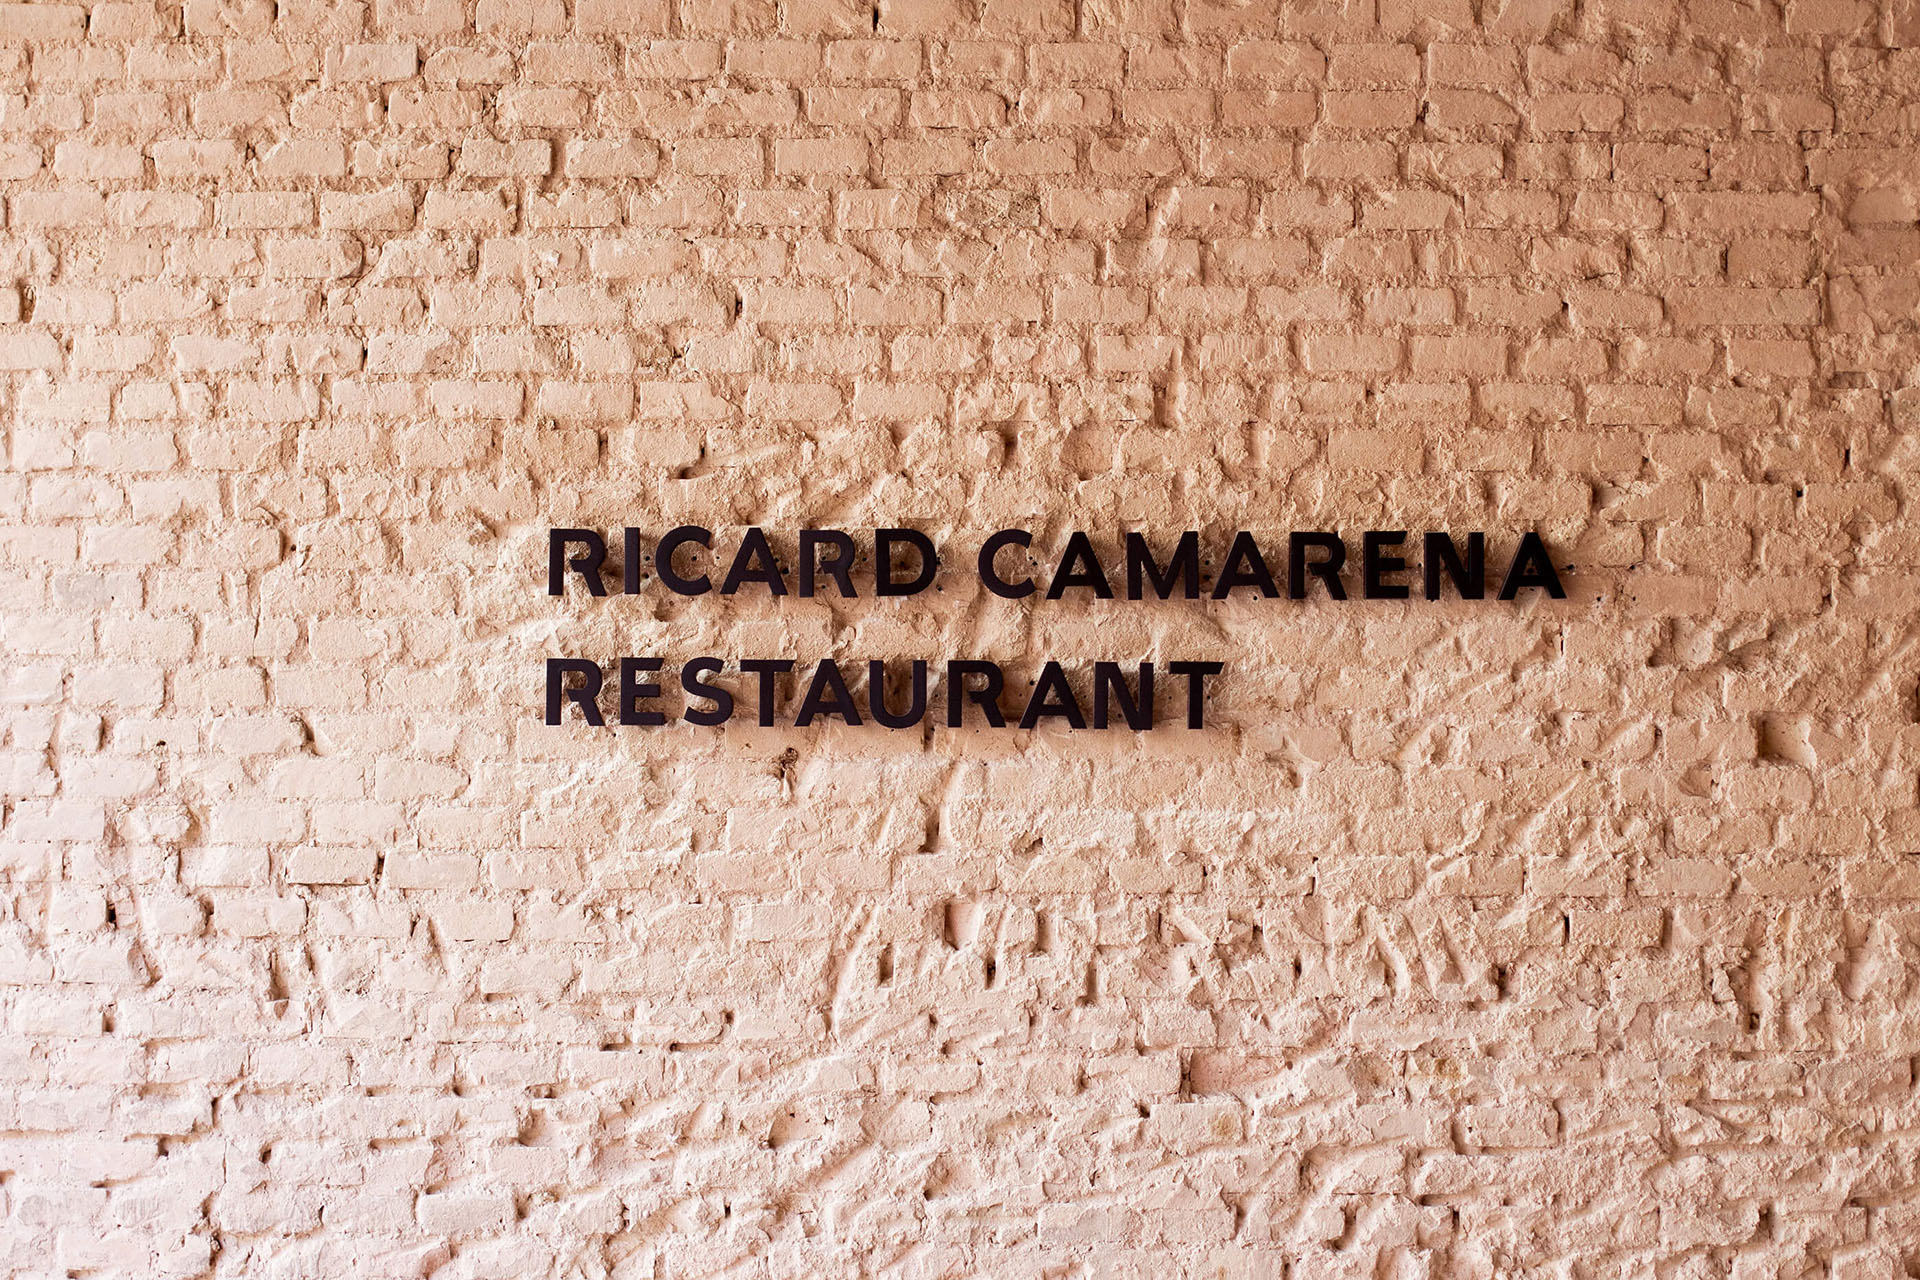 Ricard Camarena Restaurant - branding